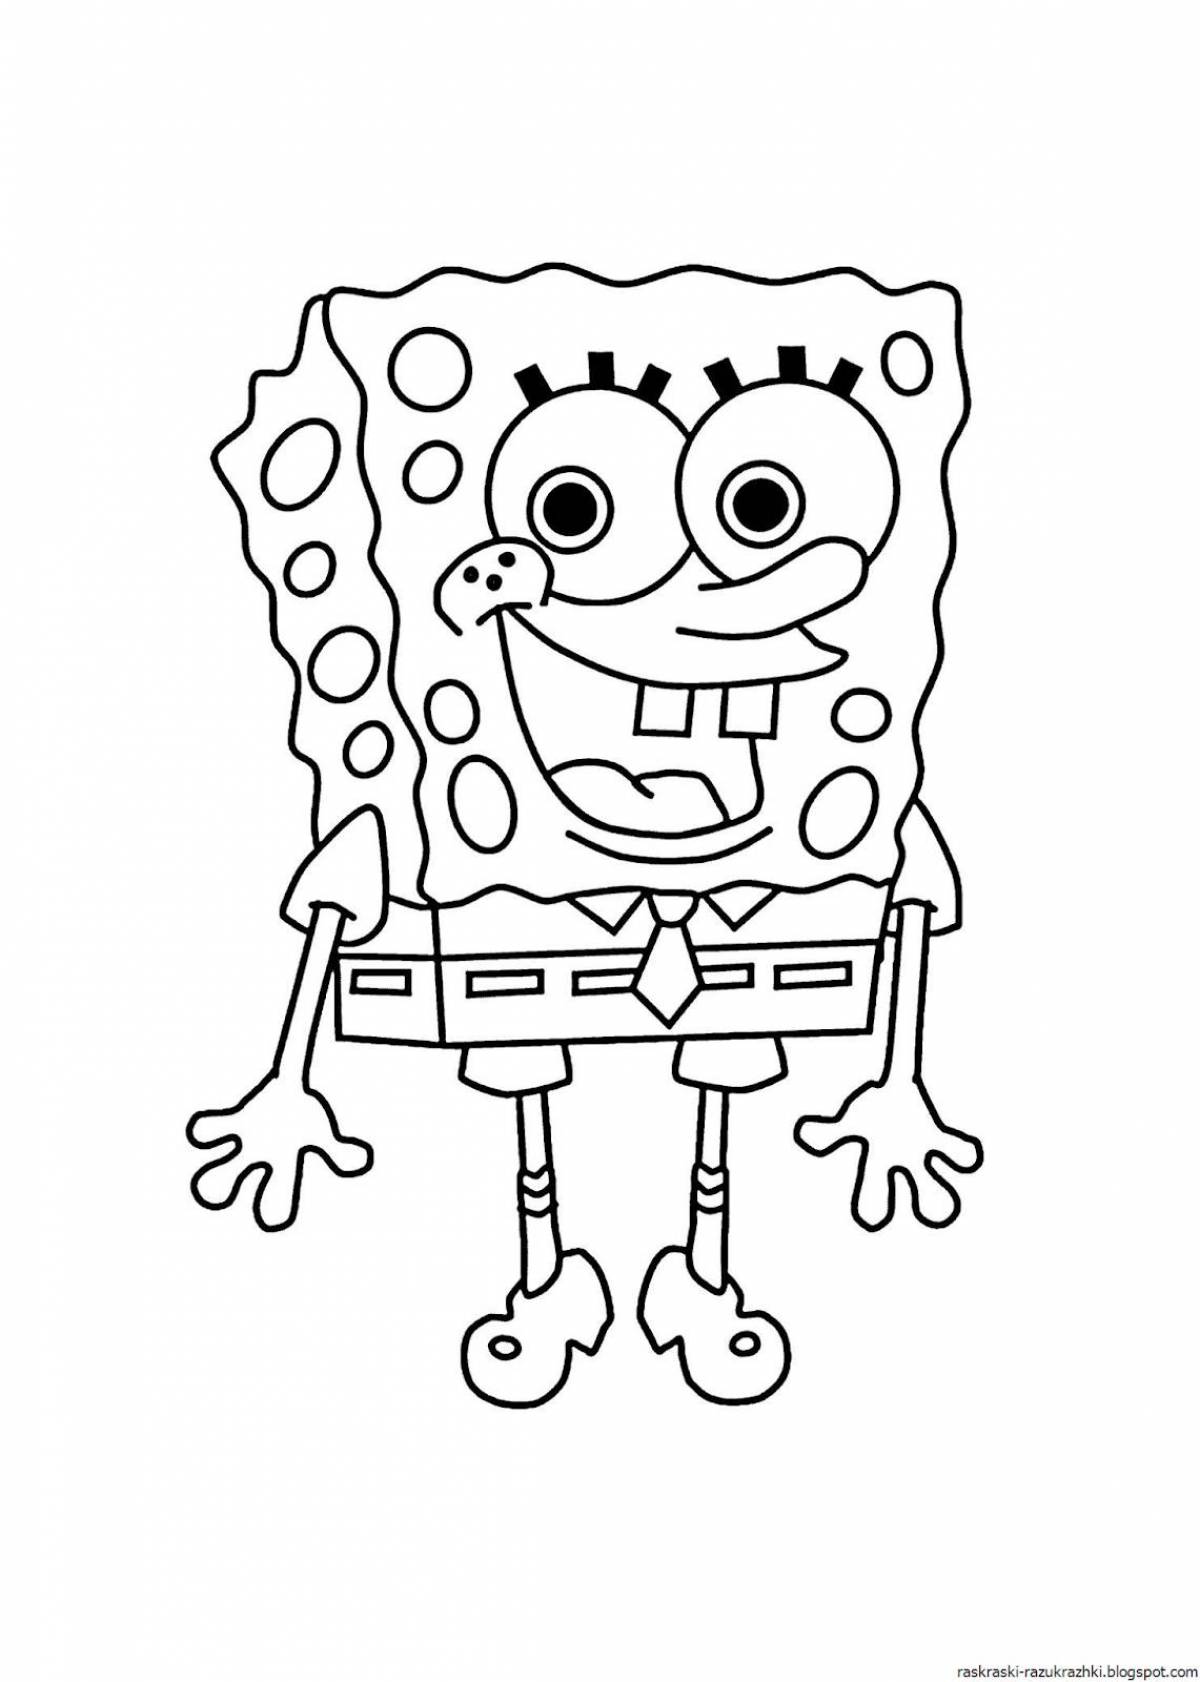 Spongebob funny coloring book